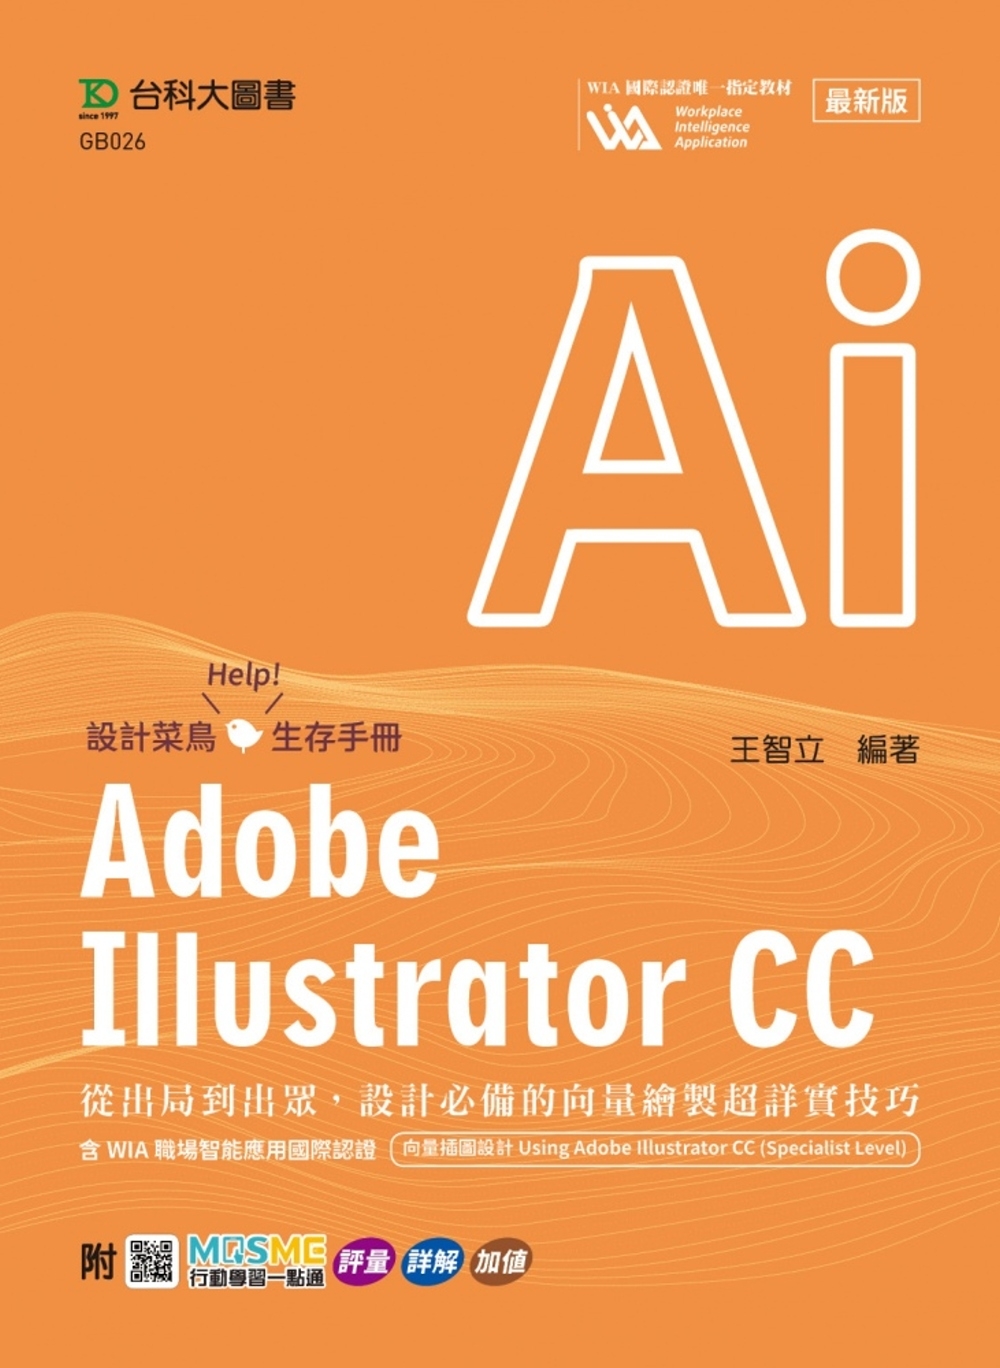 Adobe Illustrato...